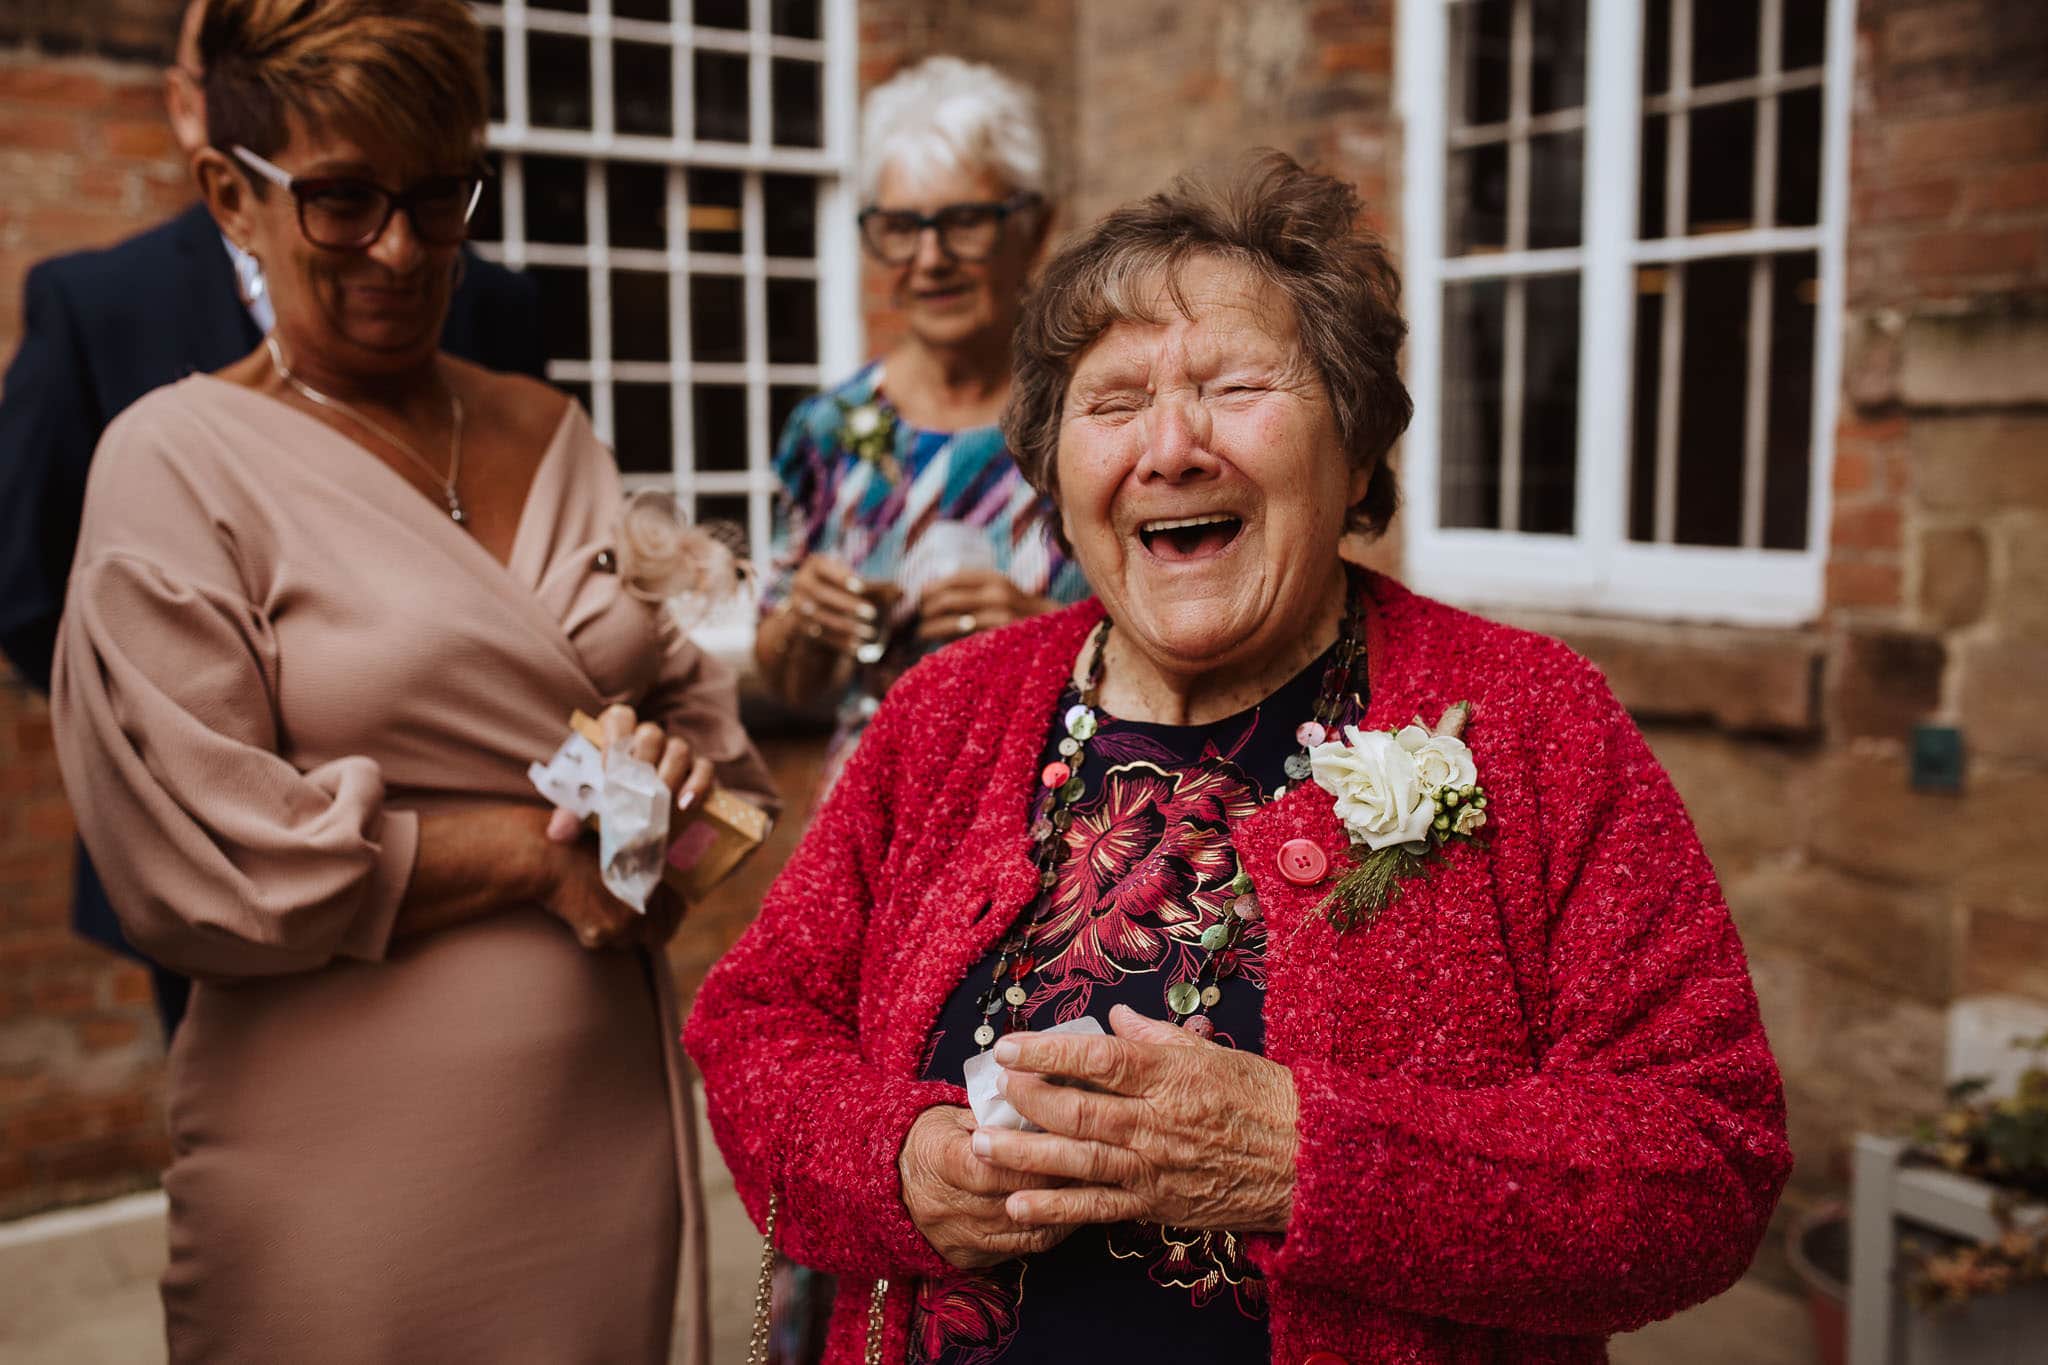 grandma laughing during confetti shot